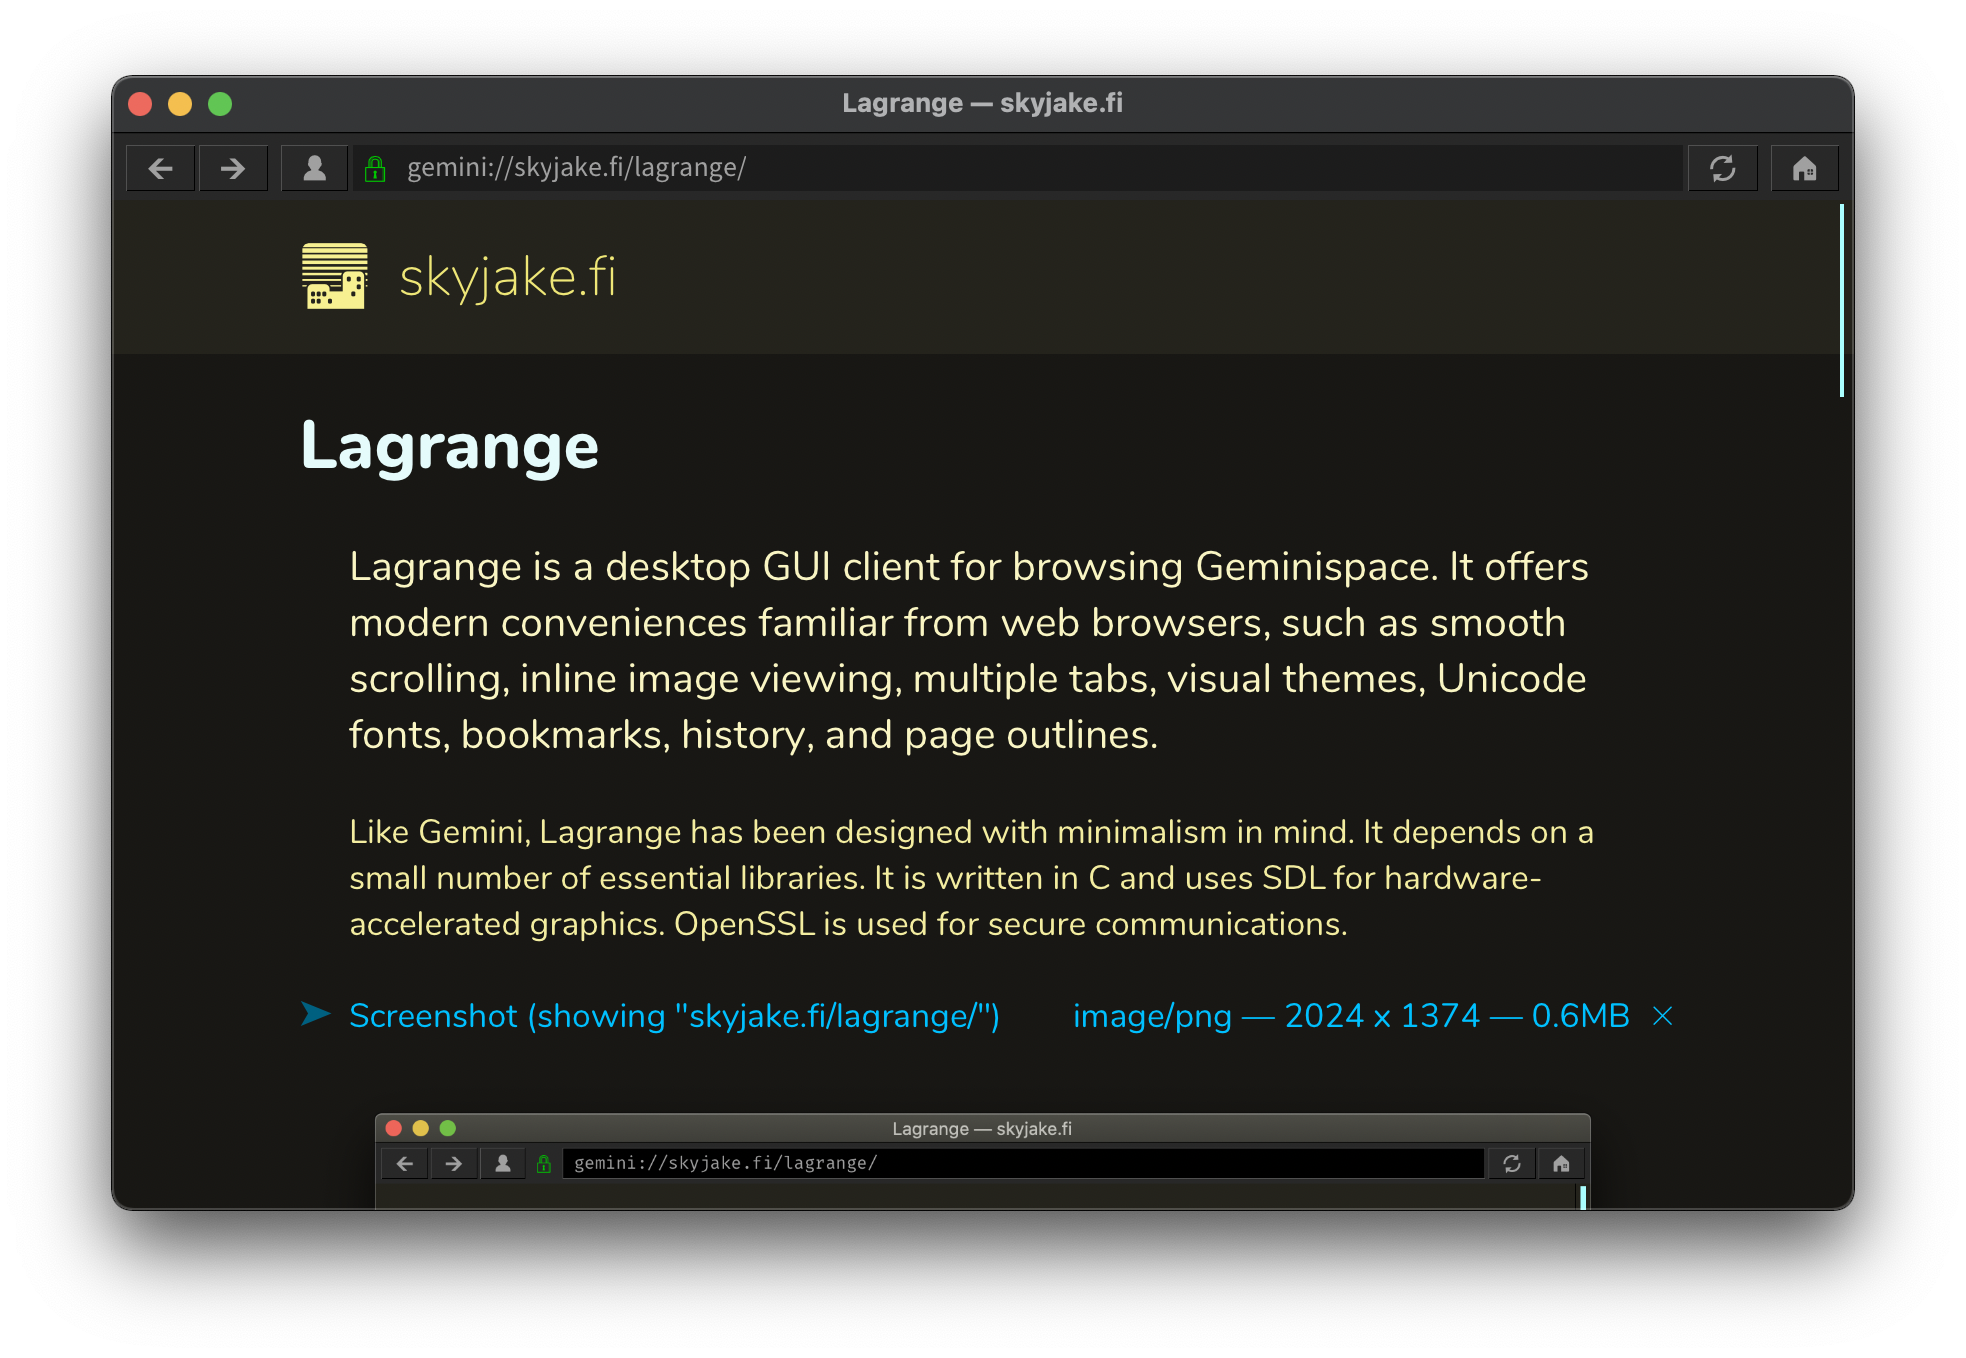 Lagrange window open on URL "about:lagrange"